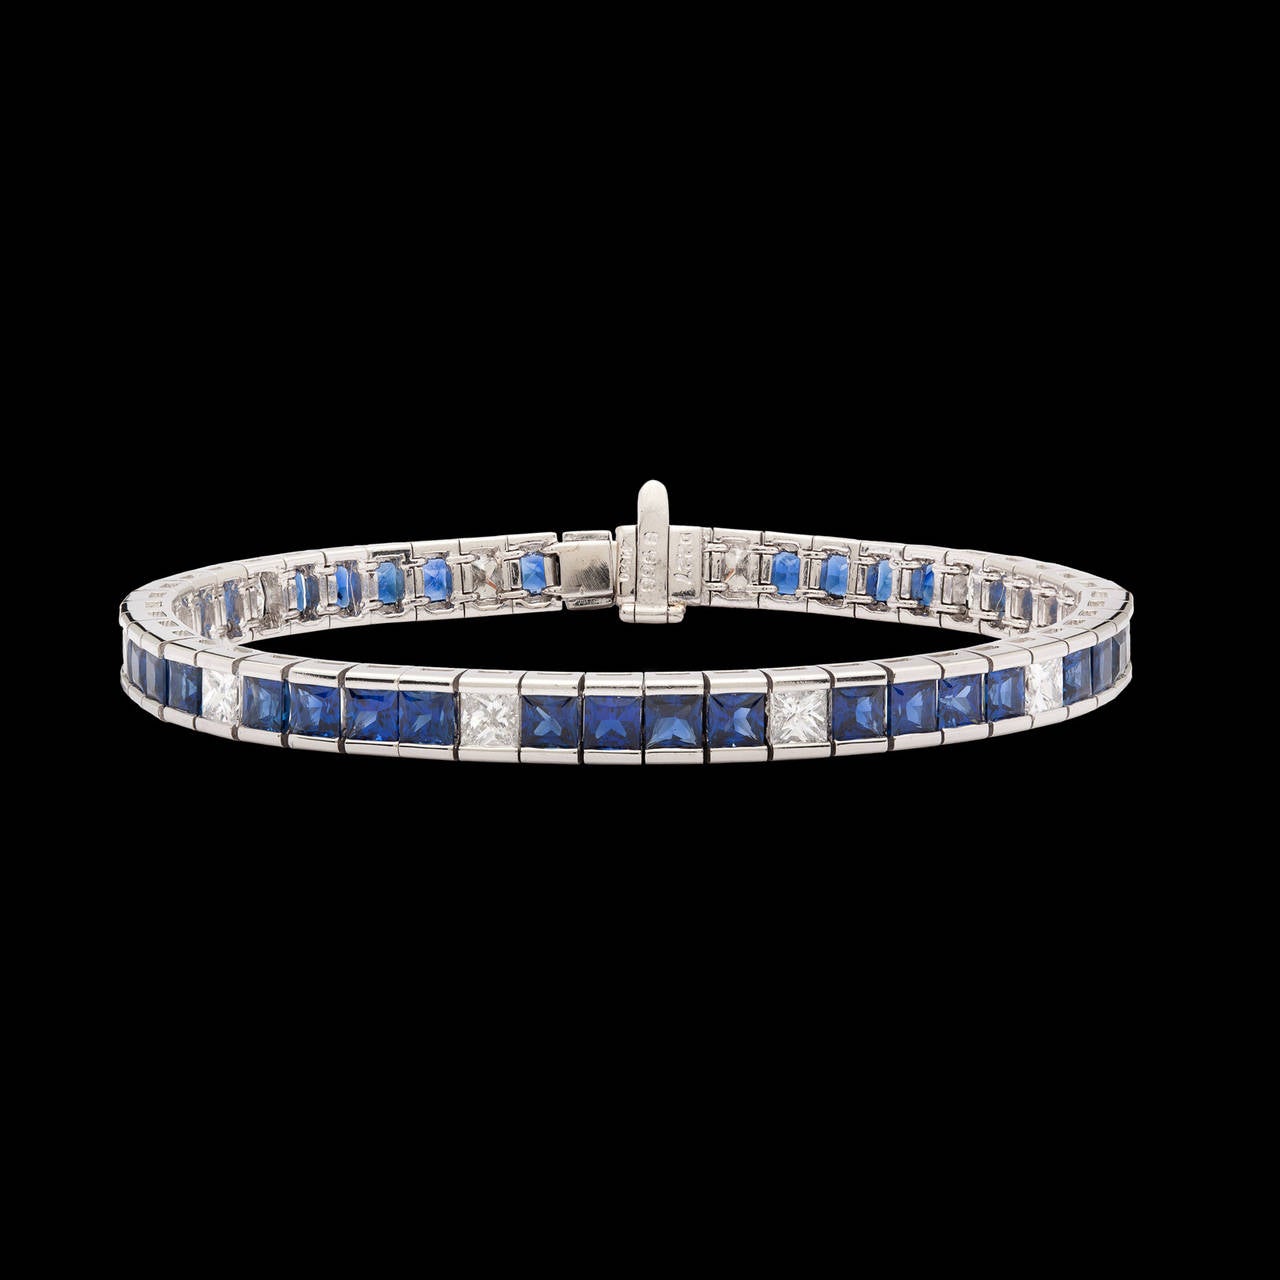 Platinum Line Bracelet features 40 Blue Sapphires totaling 9.68 carats with 10 Princess Cut Diamonds totaling 2.27 carats. The bracelet is 6.75 inches long, 5mm wide and weighs 32.1 grams total.